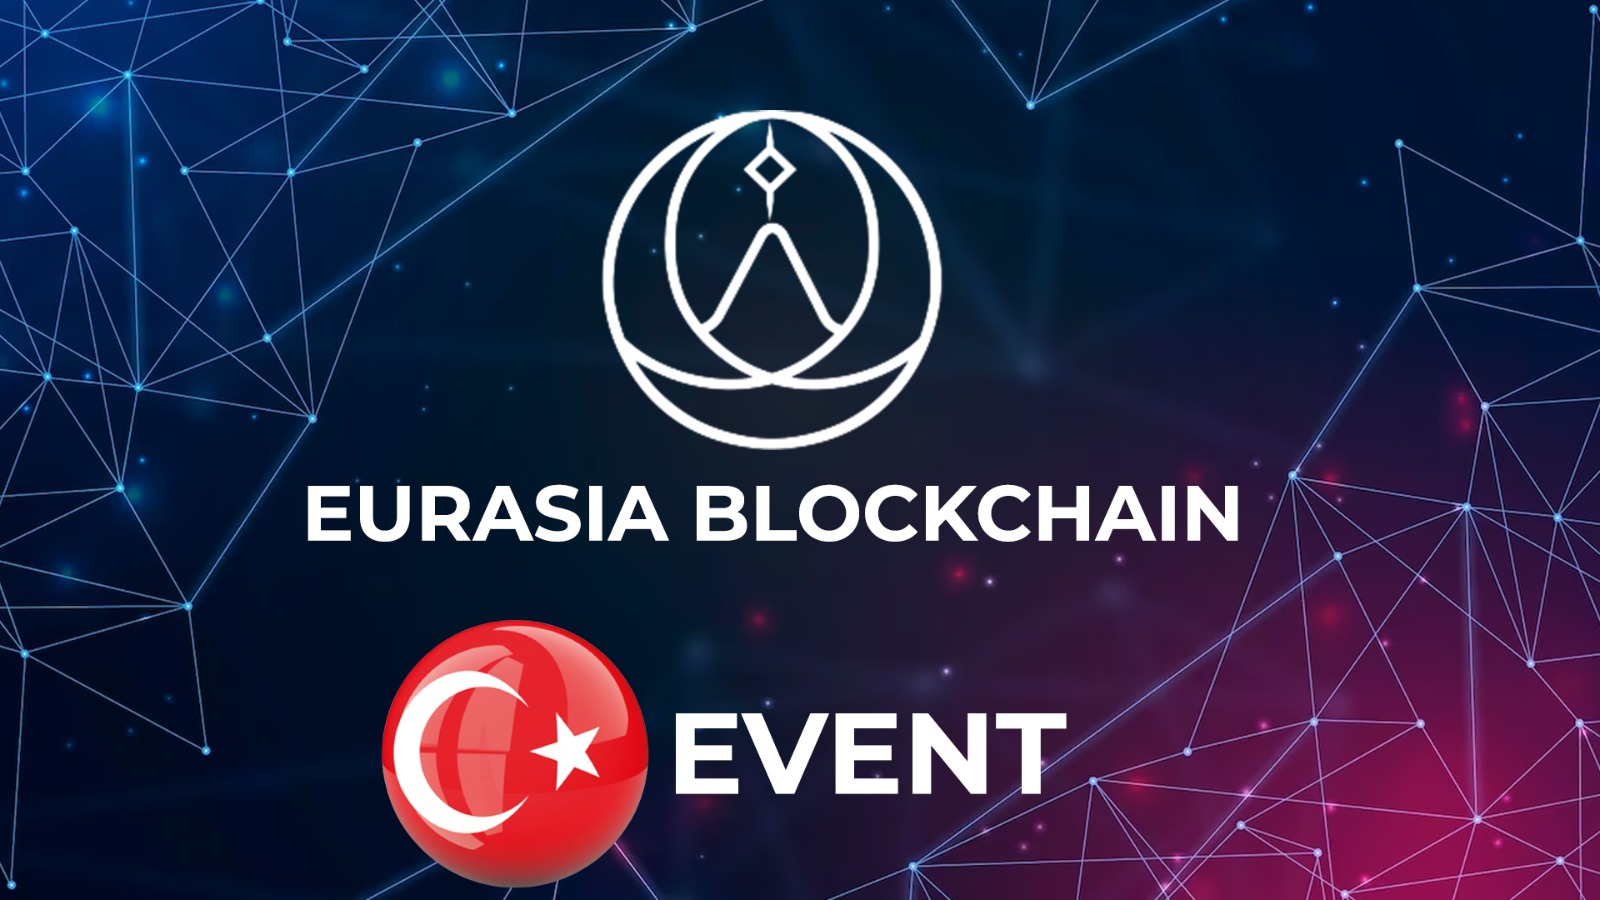 blockchain event